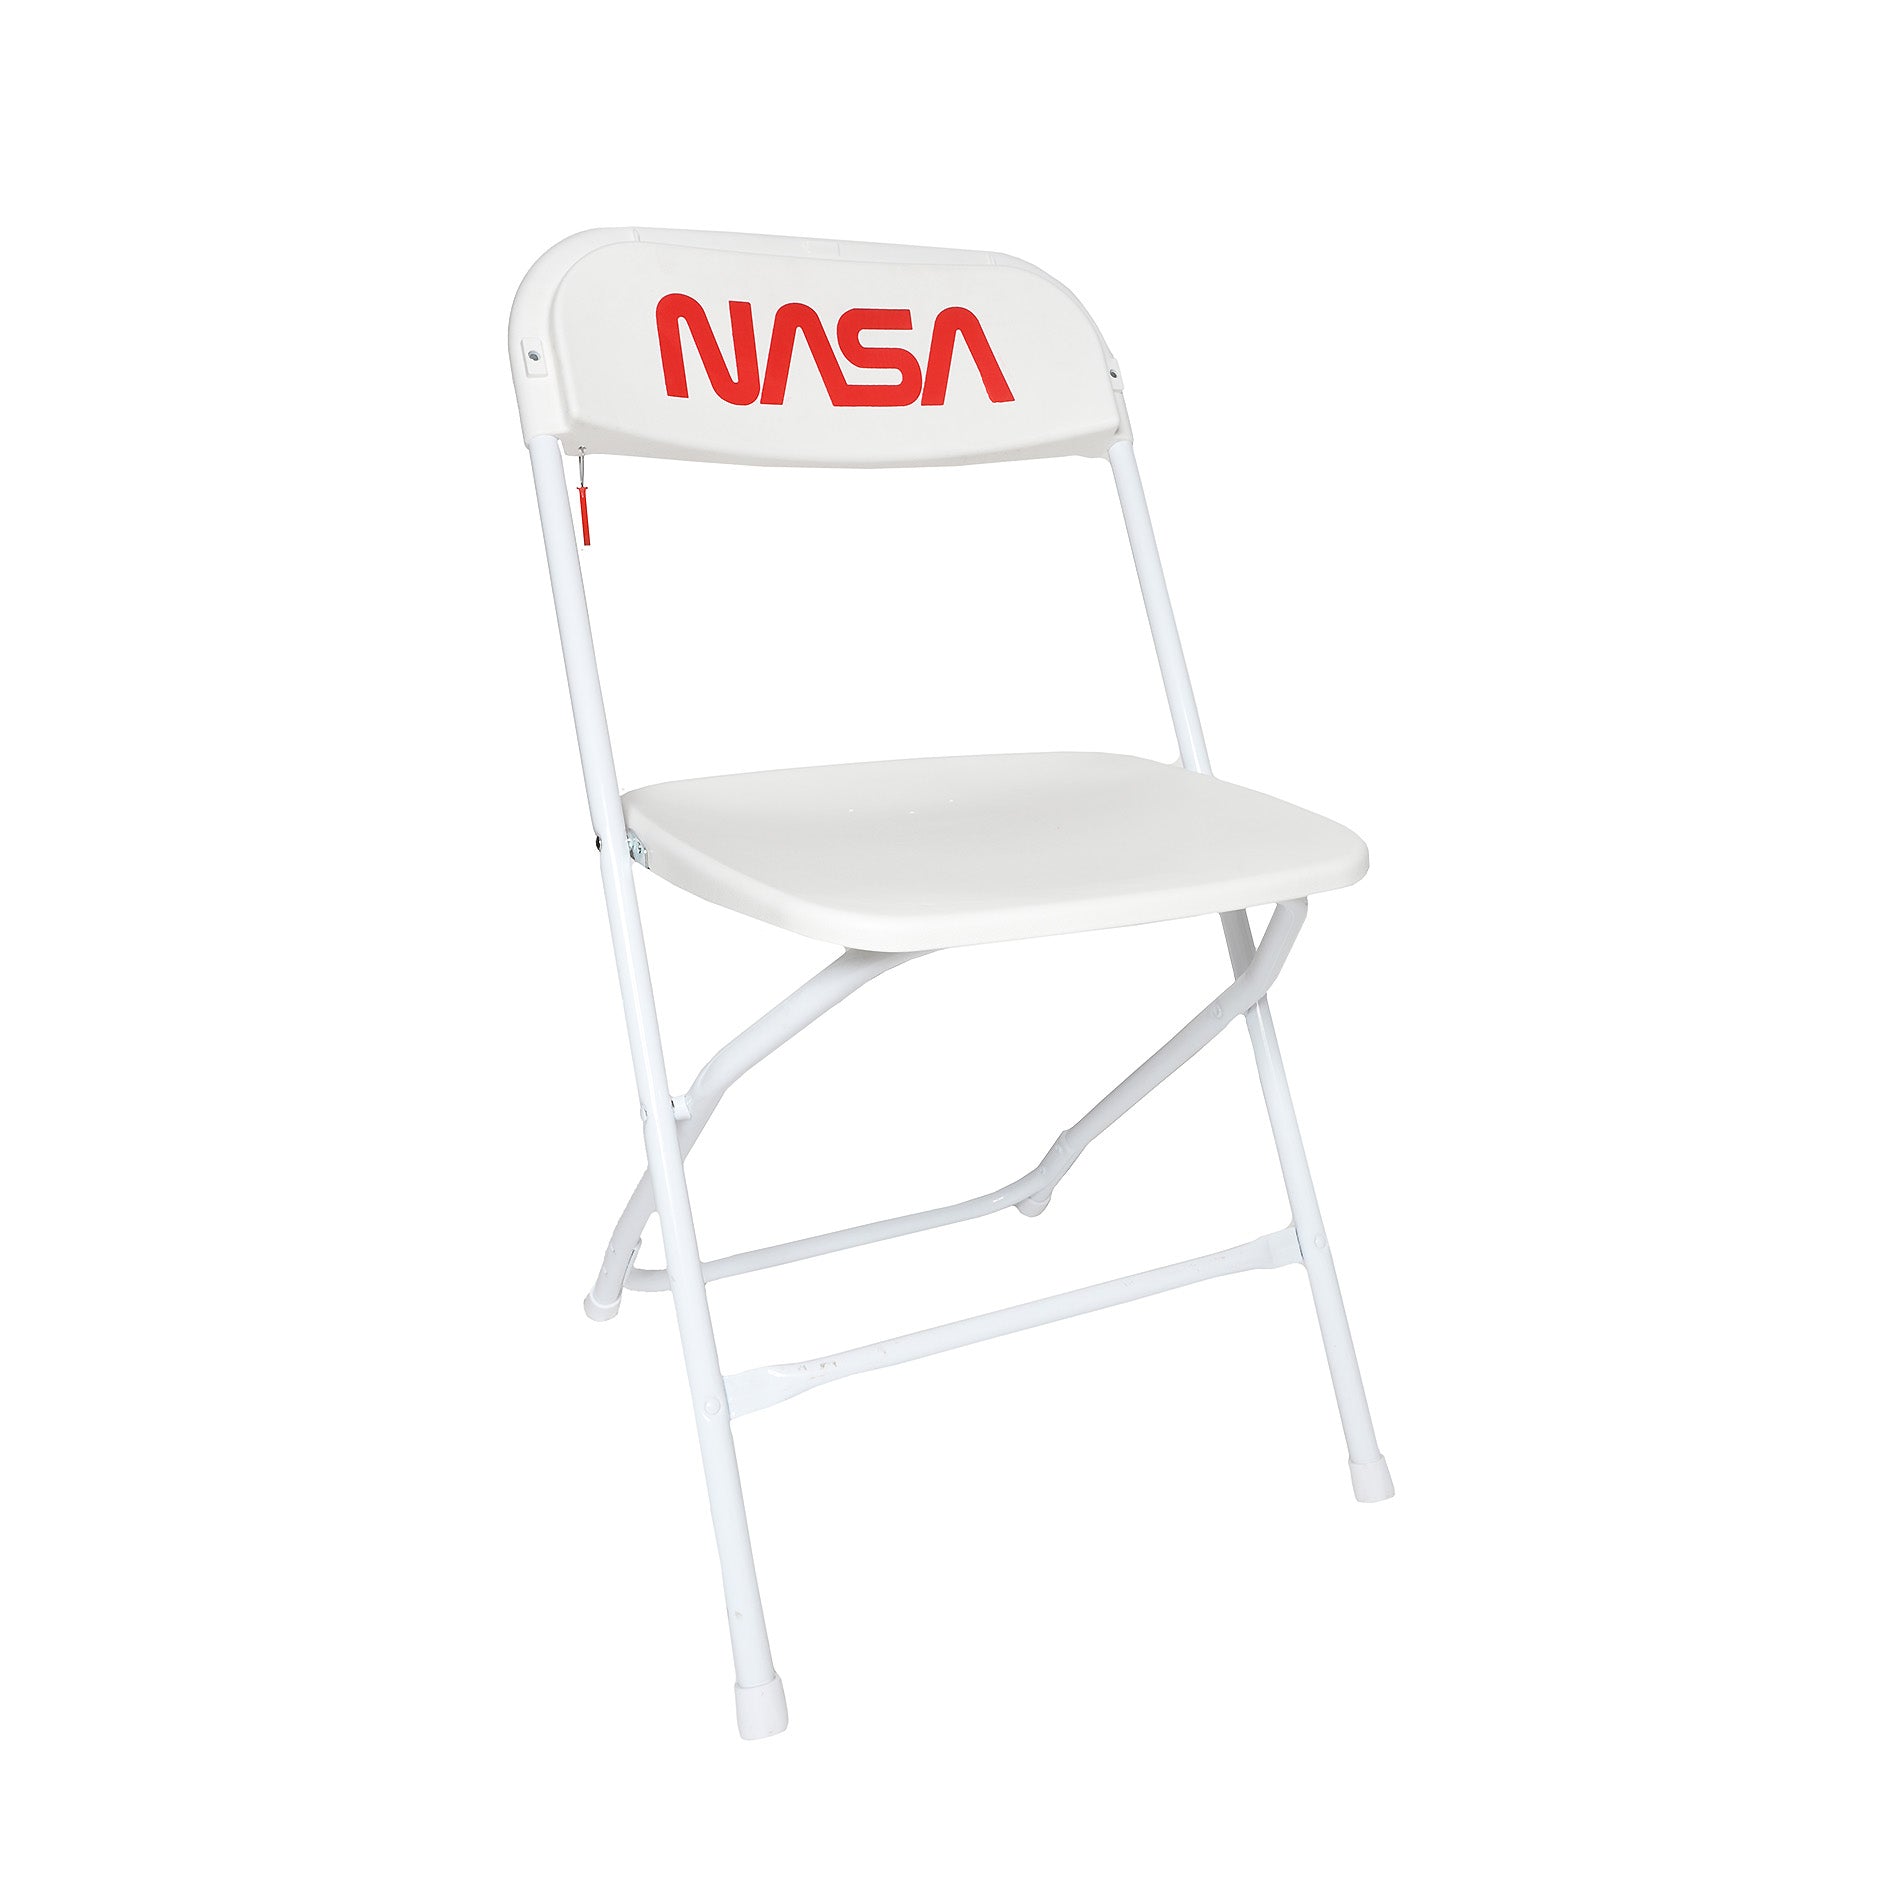 Tom Sachs Space Program: NASA Chair 2020 #547 "Aaliyah"